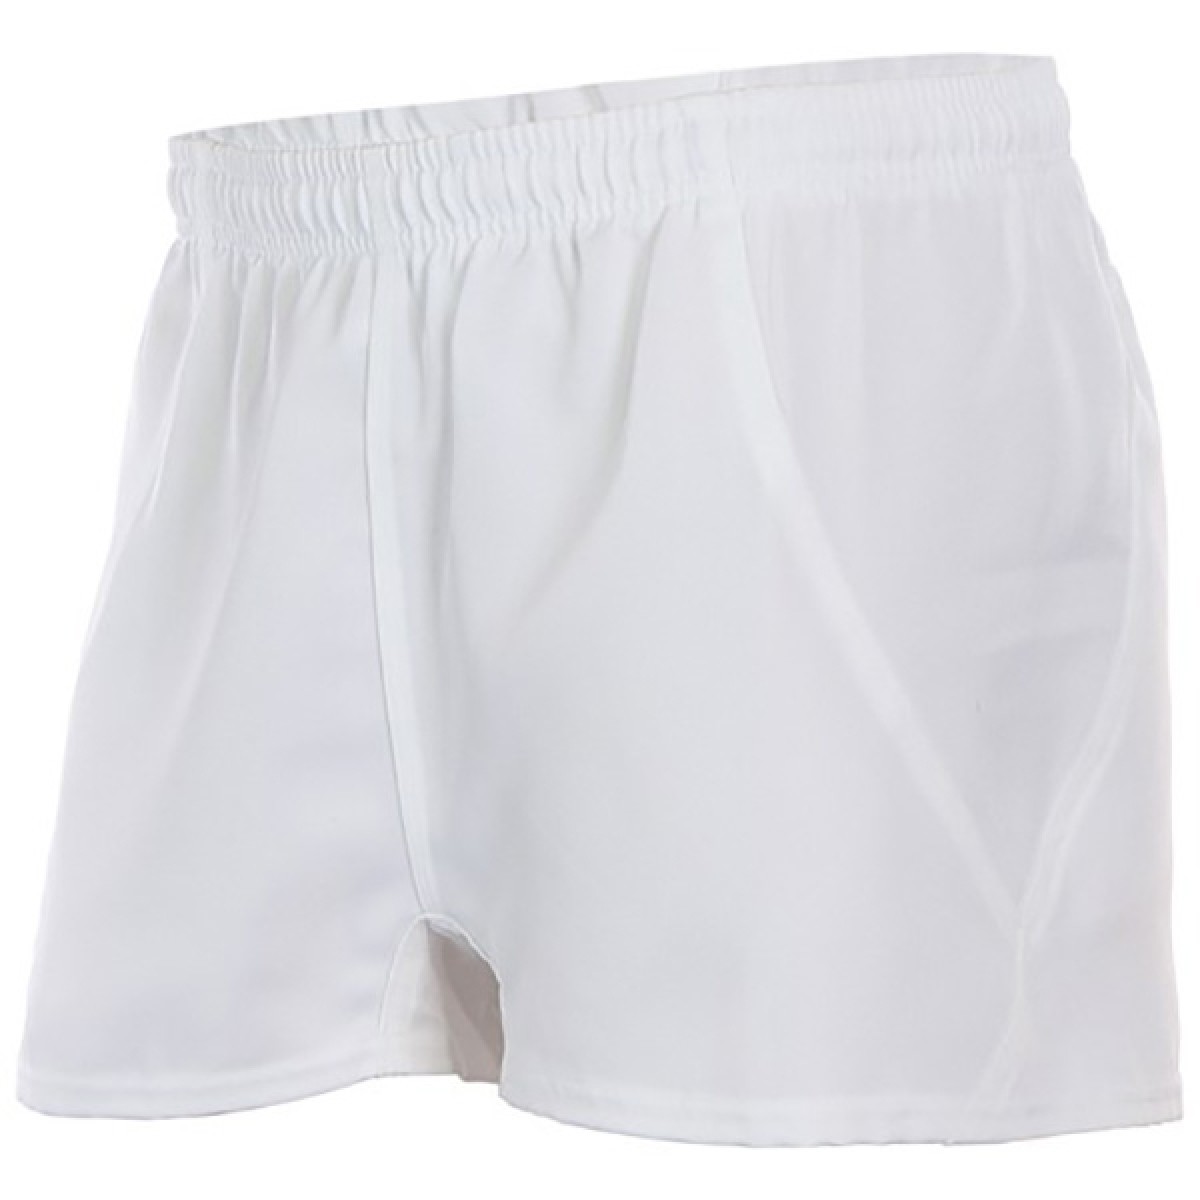 BLK Tek Shorts White - School Locker